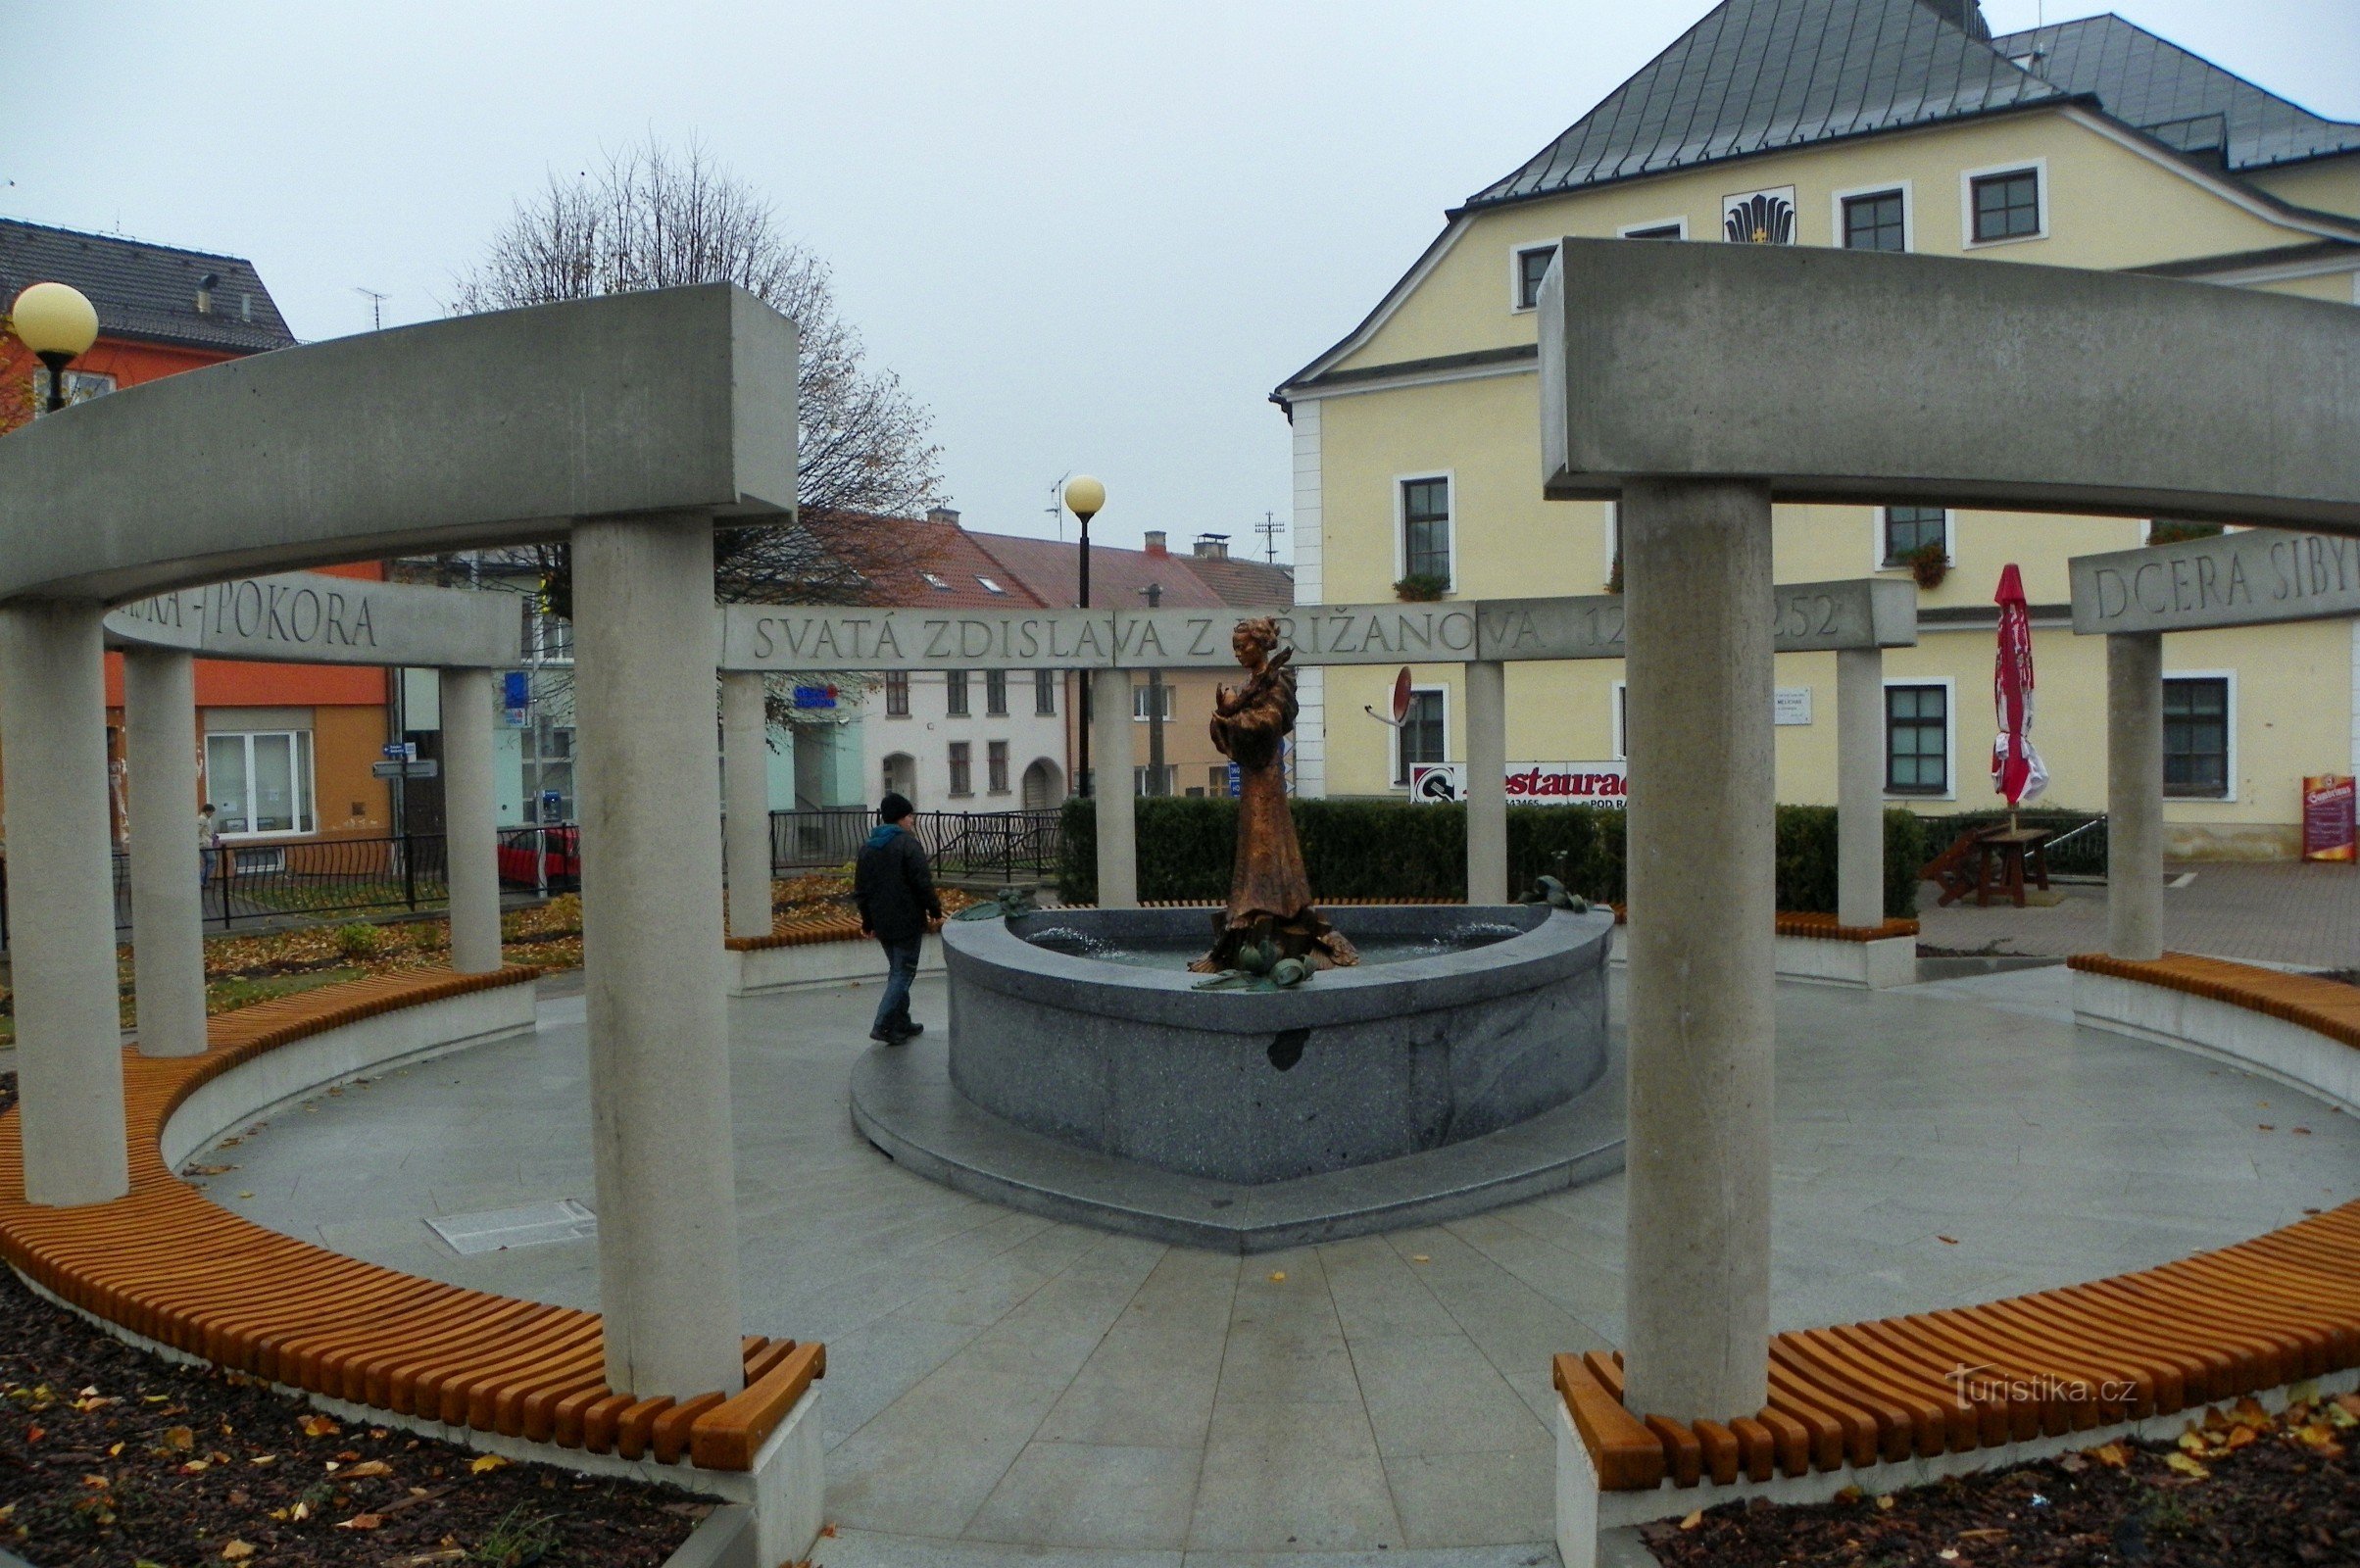 Monument til St. Zdislava i Křižanov